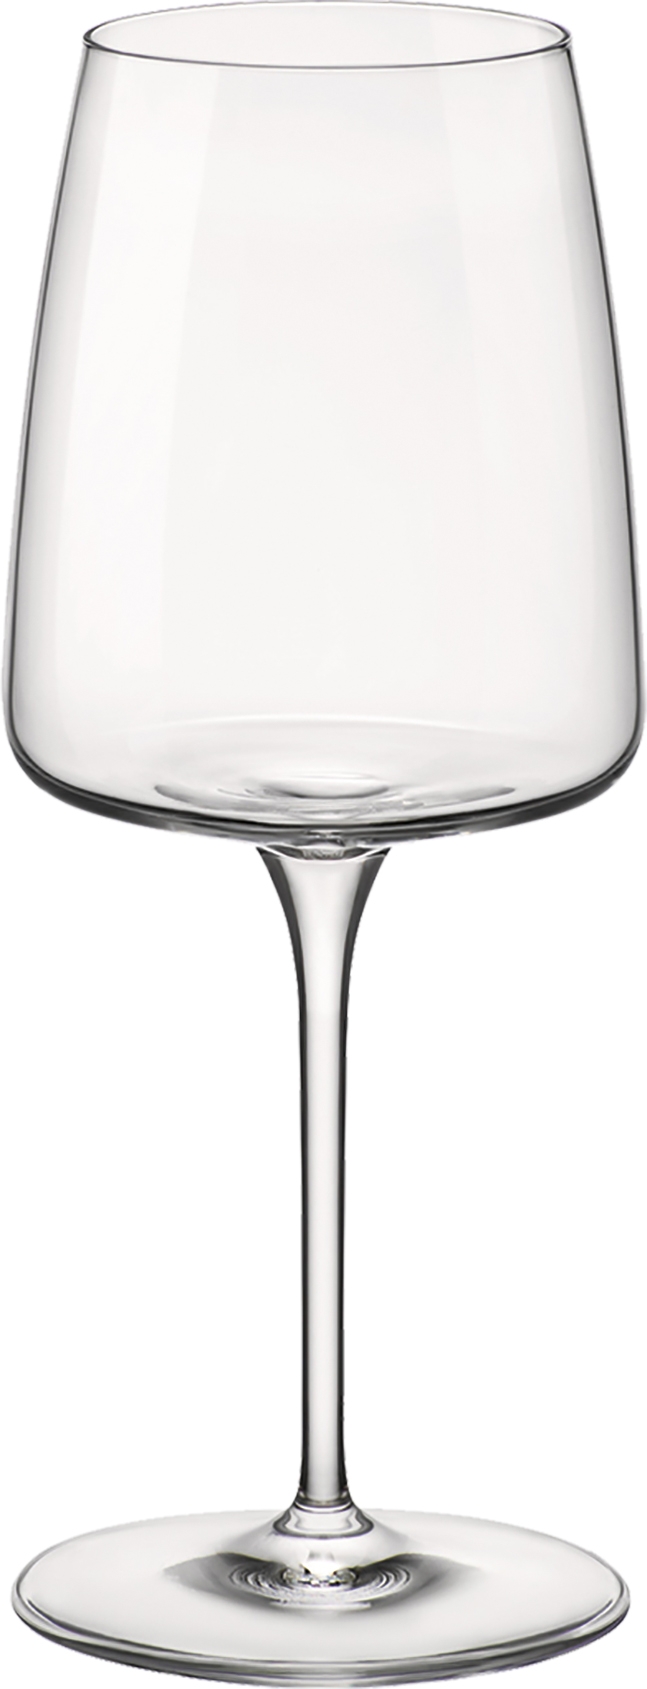 Bormioli Rocco Nexo Weinkelch, 380ml, mit Füllstrich bei 0.1l+0.2l, Kristallglas, transparent, 6 Stück